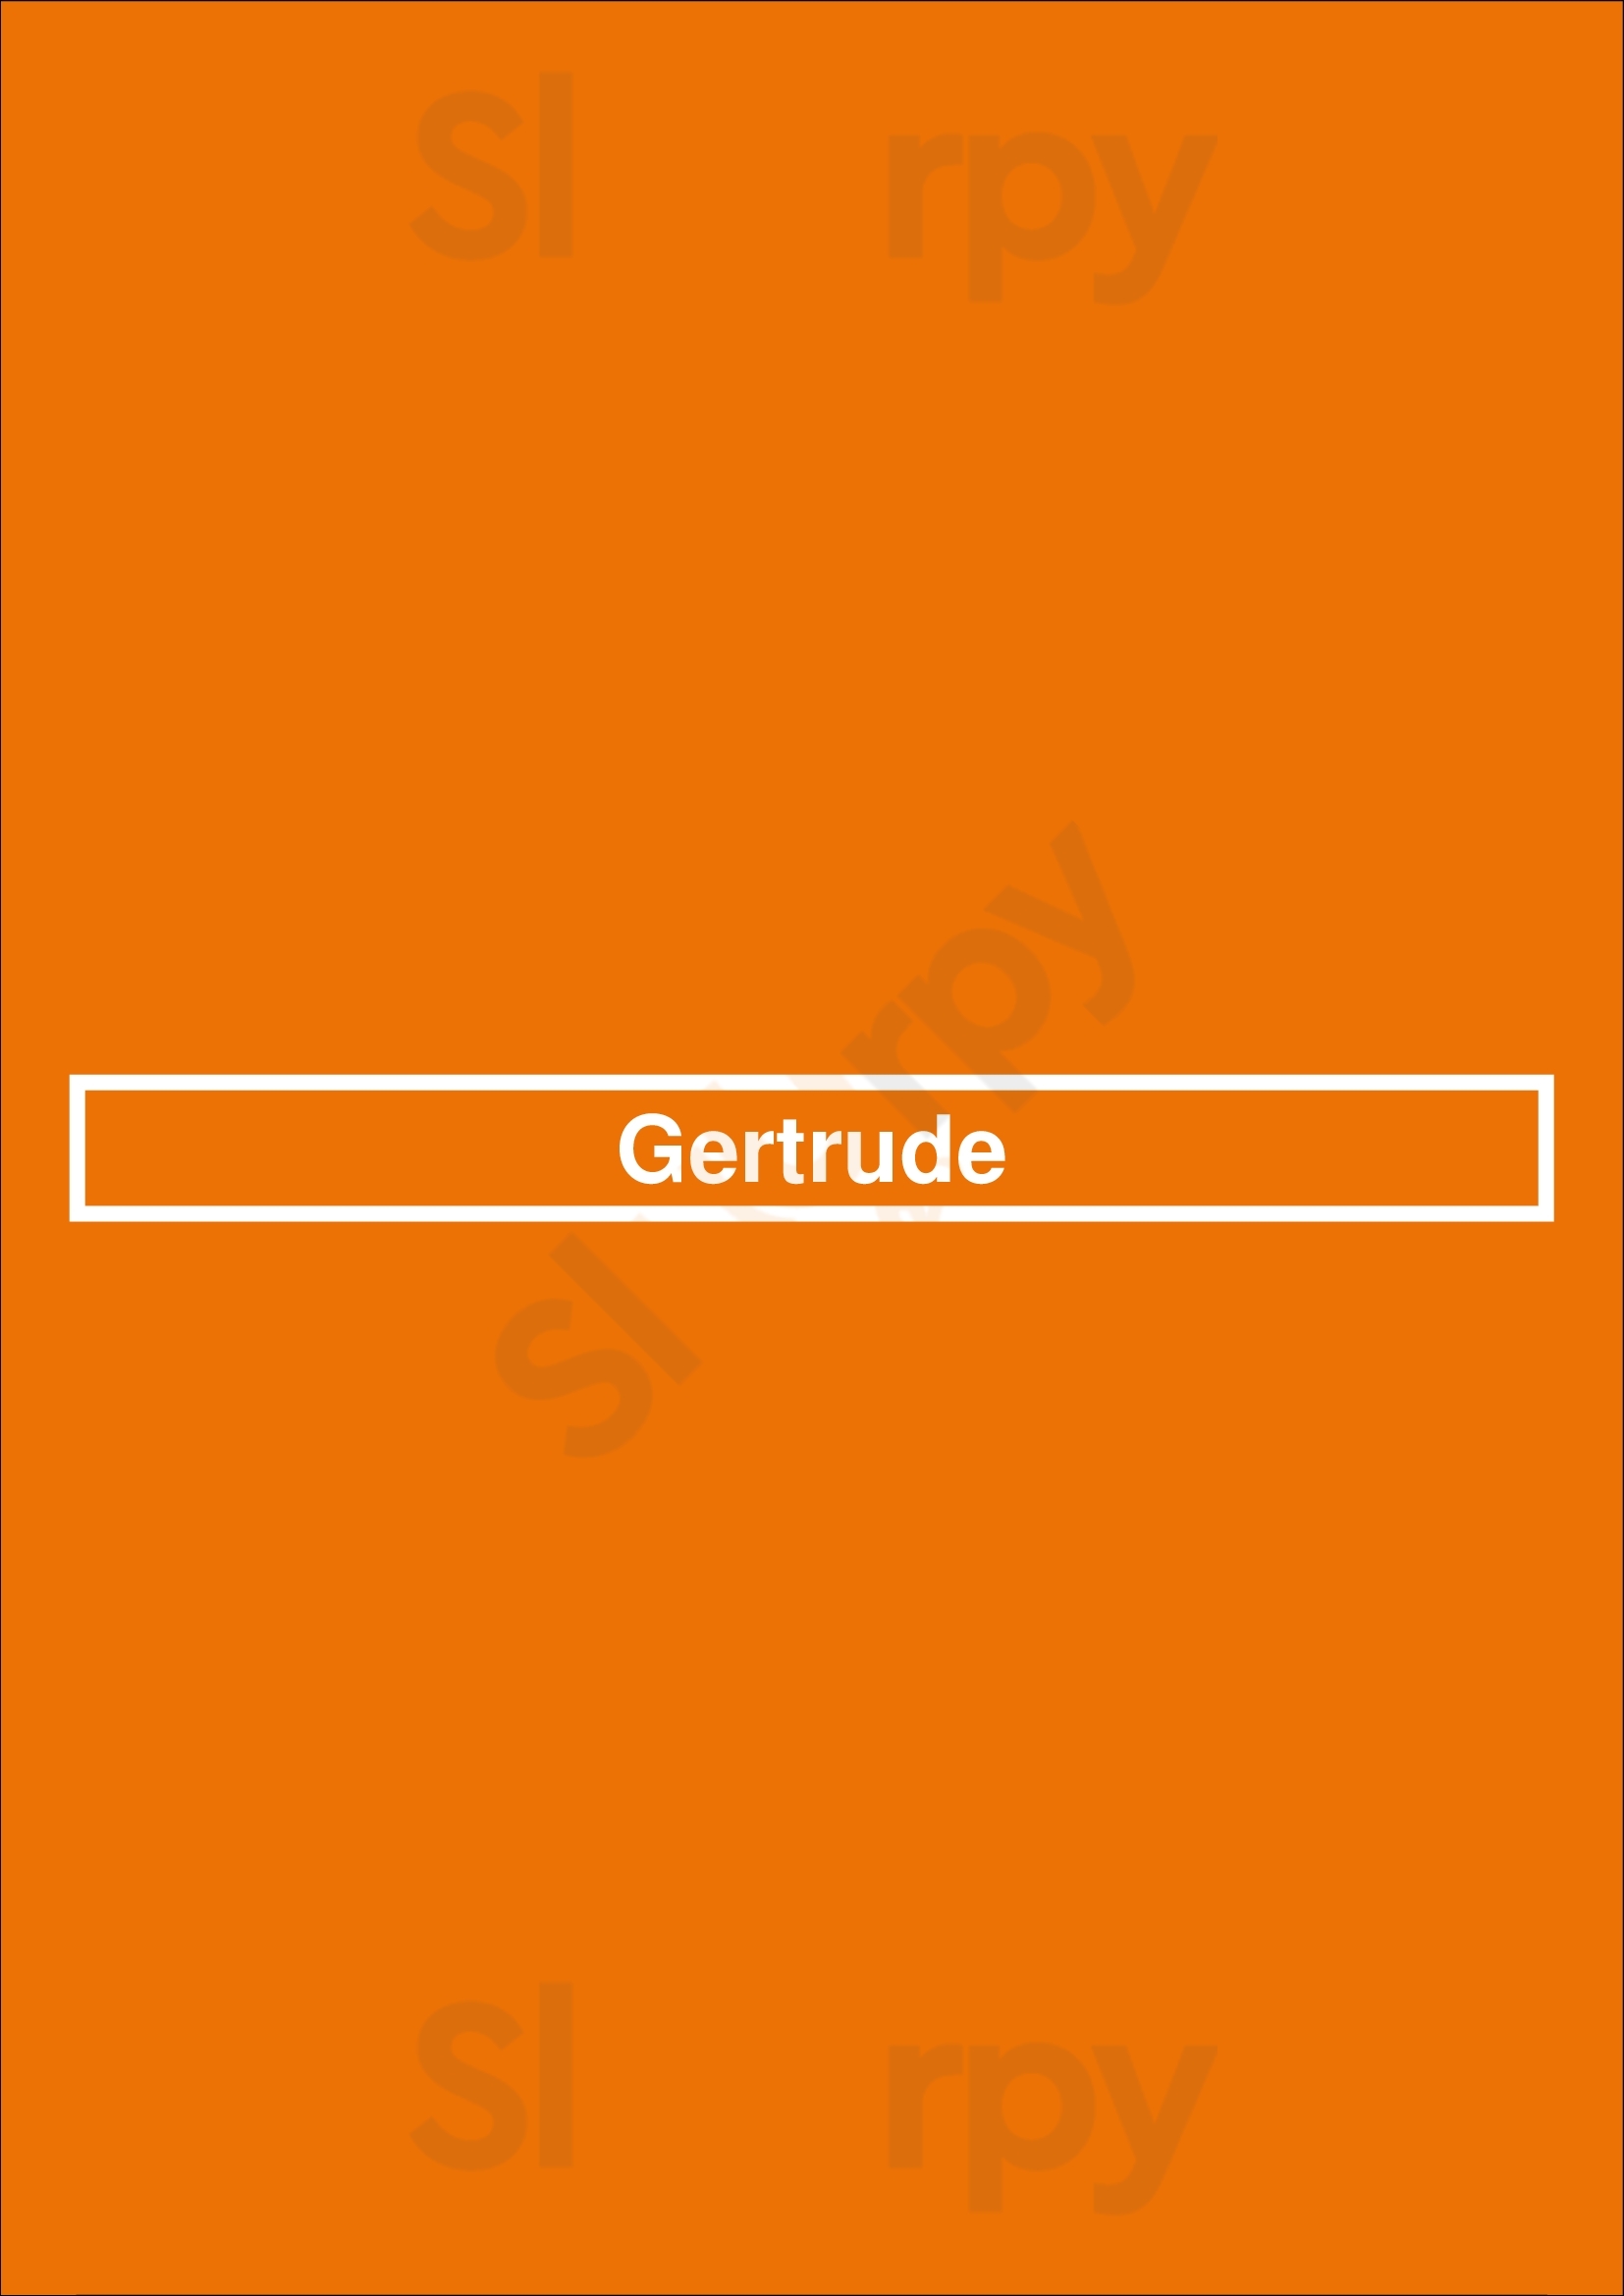 Gertrude Dublin Menu - 1